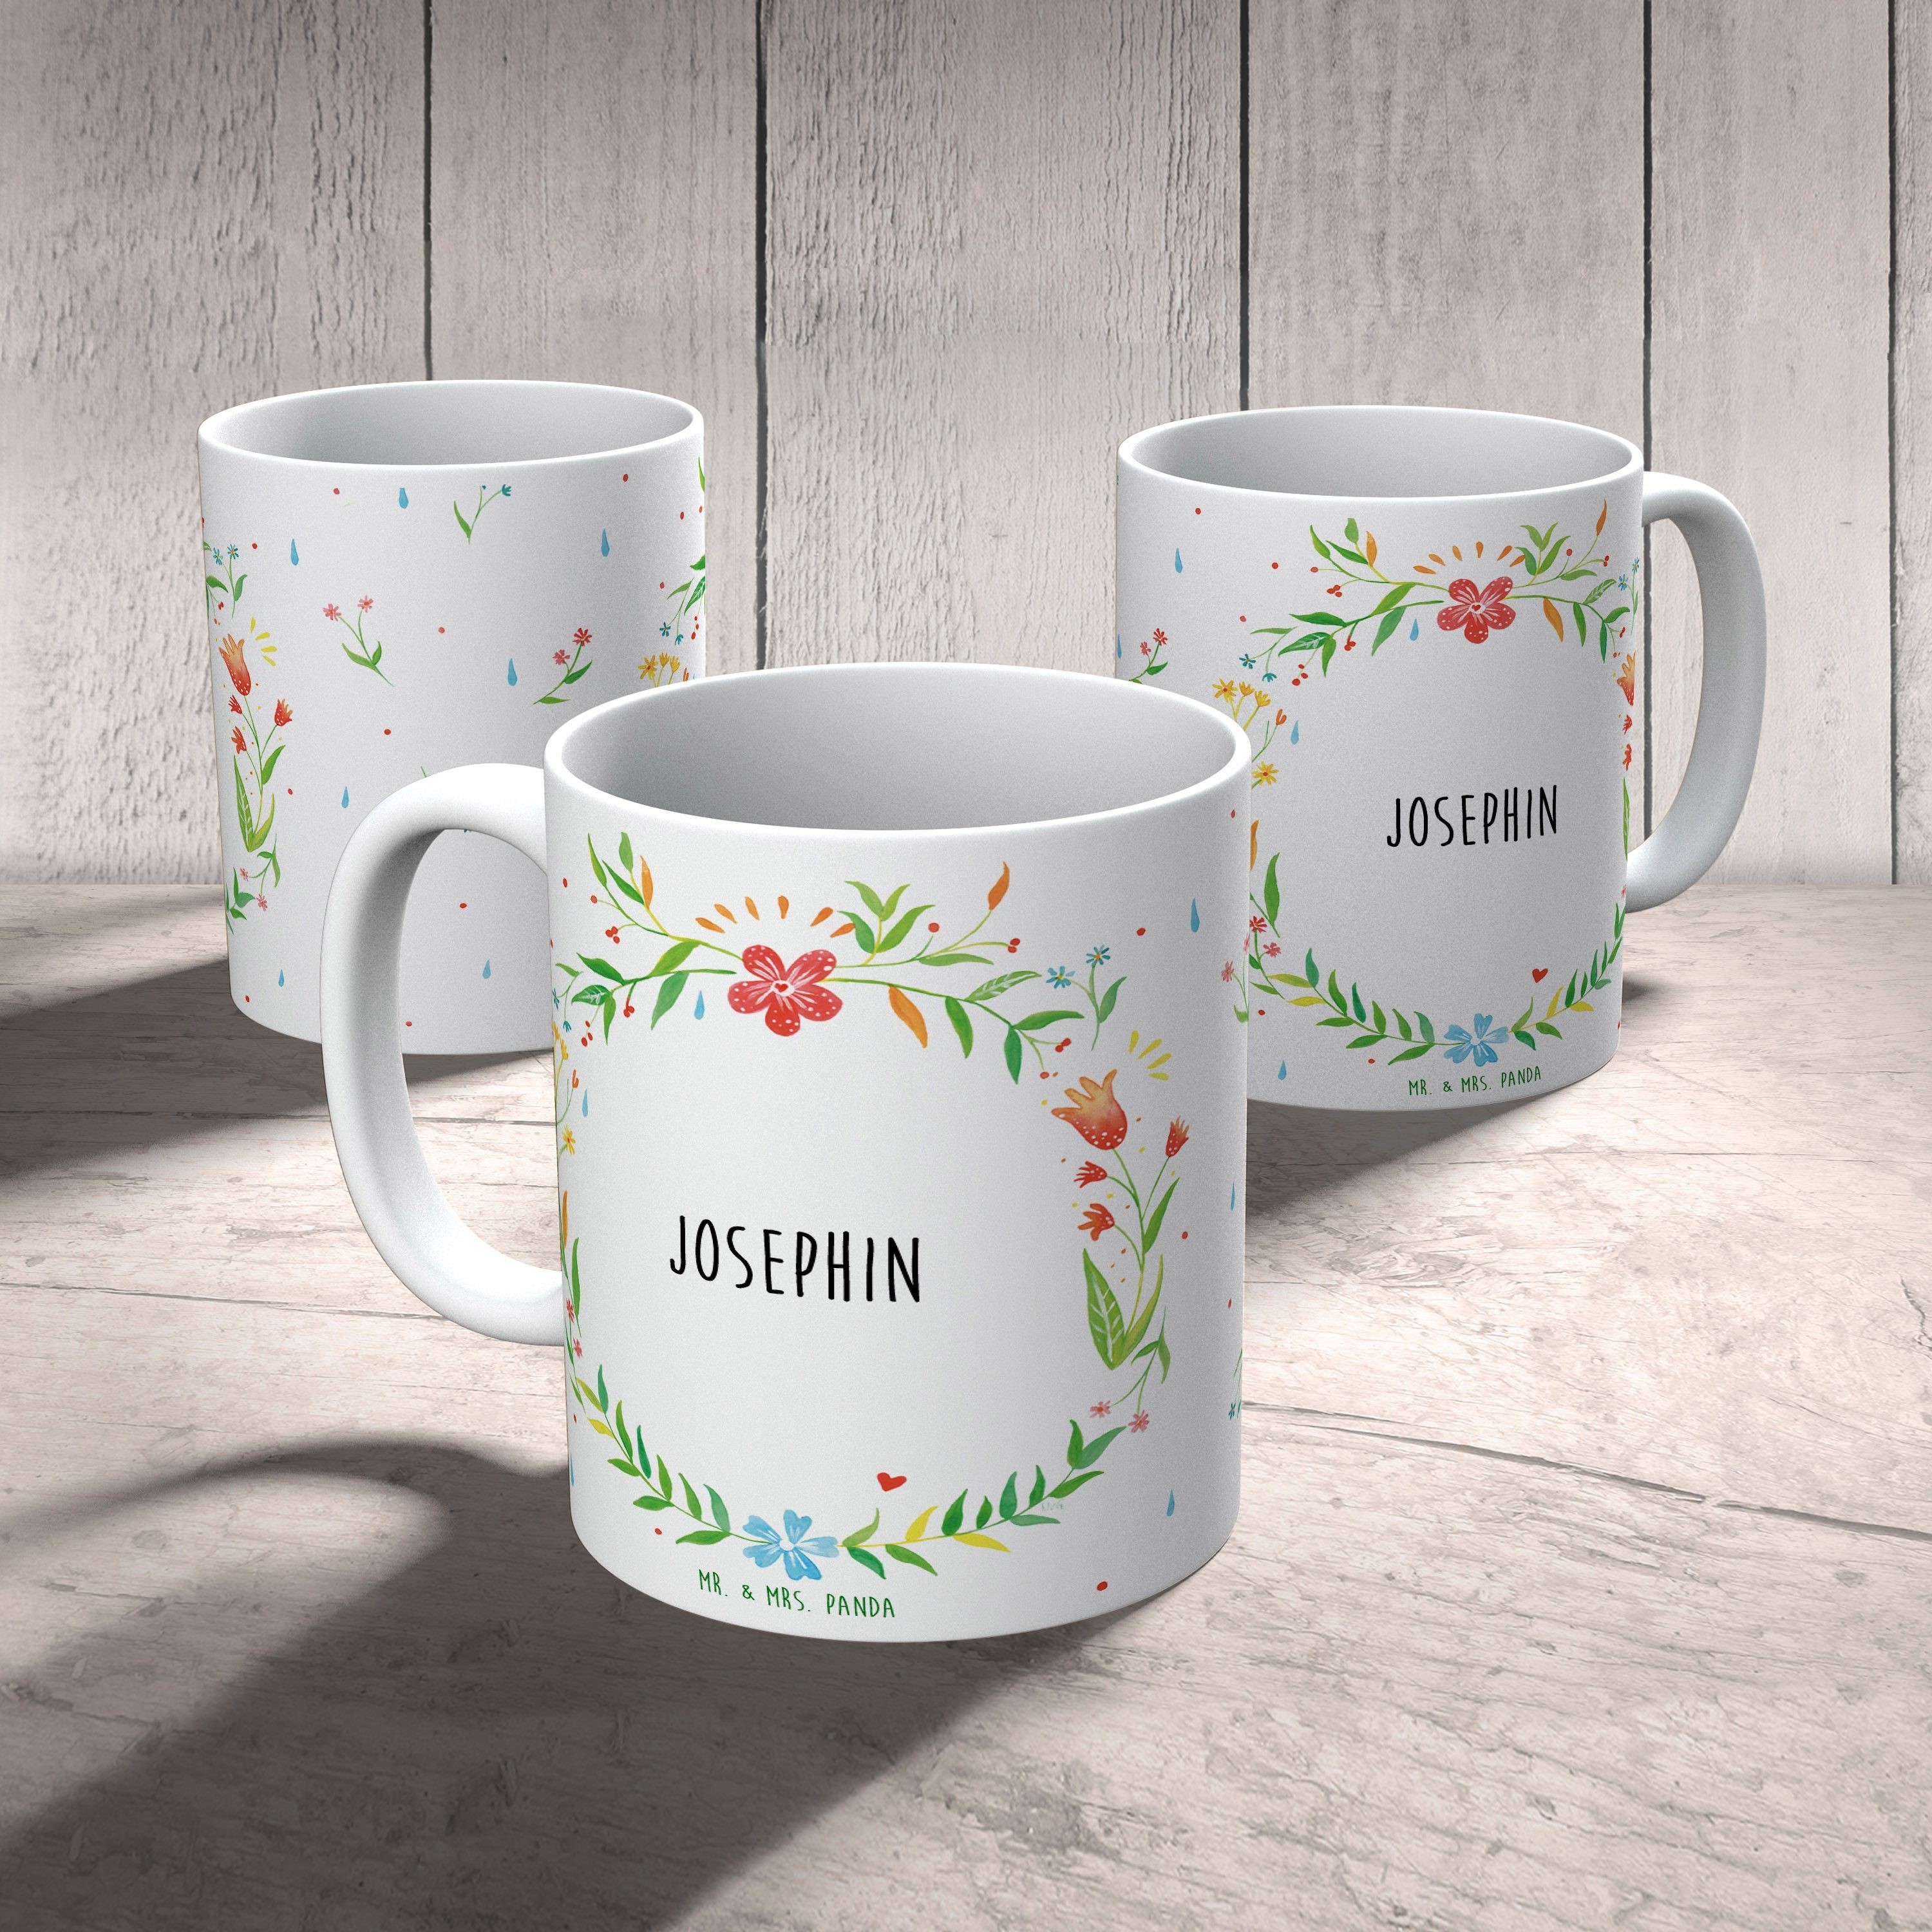 Mr. & Mrs. Panda Tasse Tasse Keramik Motive, Kaffeebecher, Tasse Sprüche, Josephin Kaffe, Geschenk, 